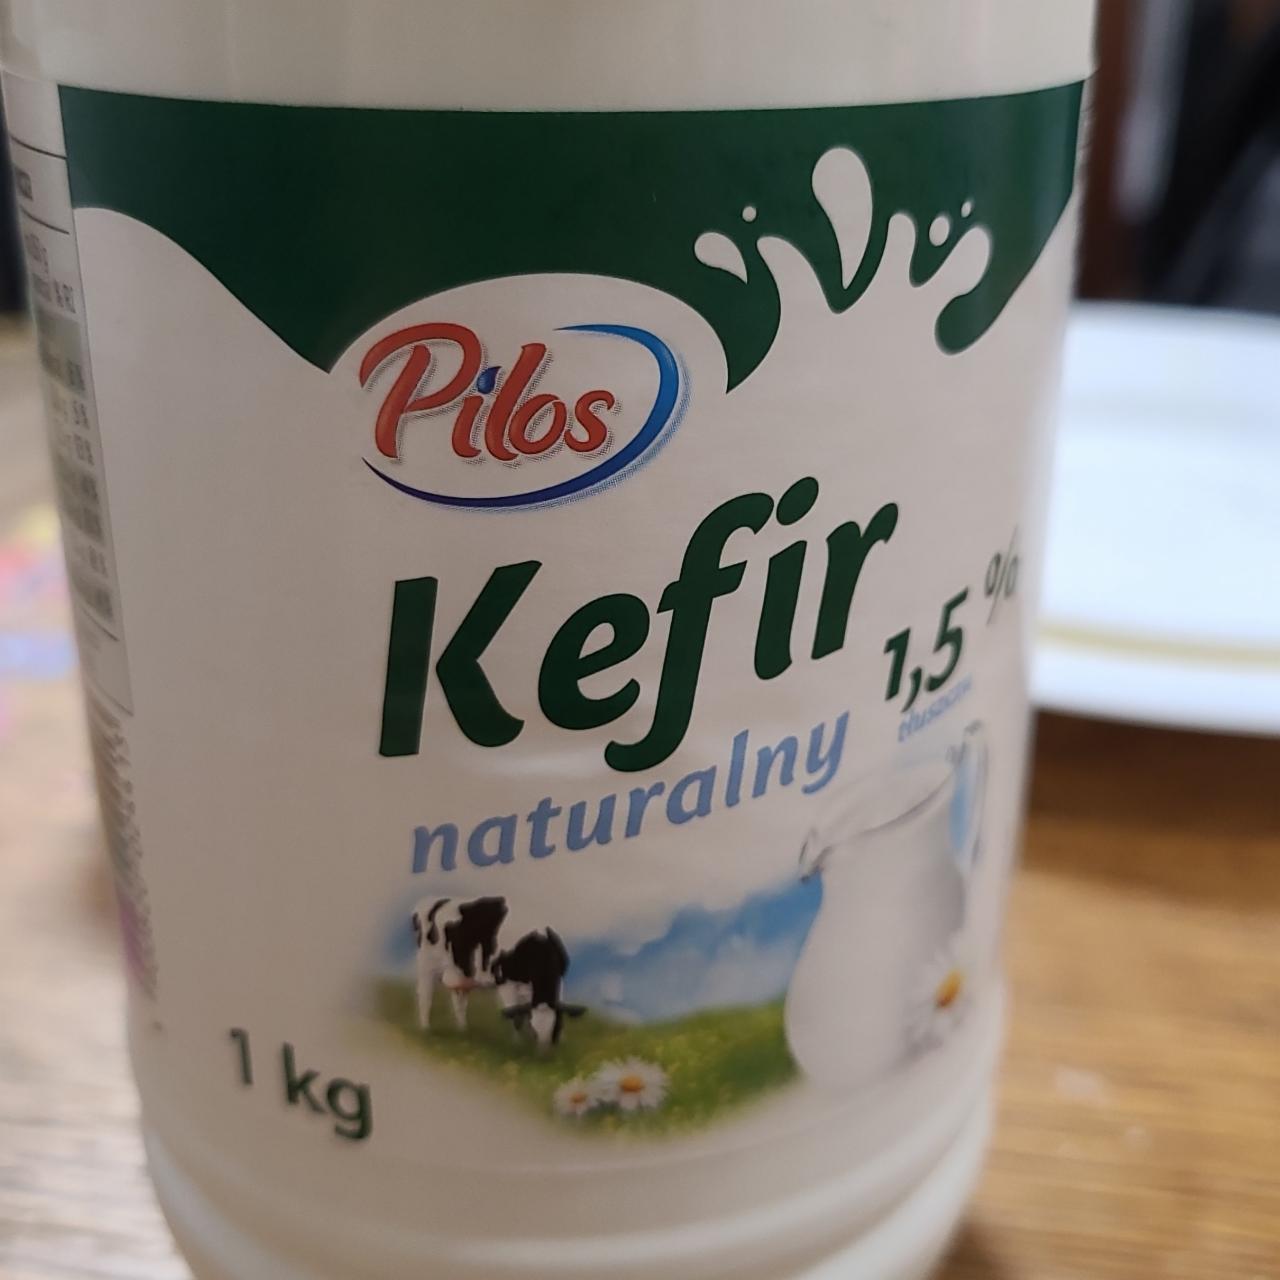 Fotografie - kefírové mlieko Pilos 1,5 %